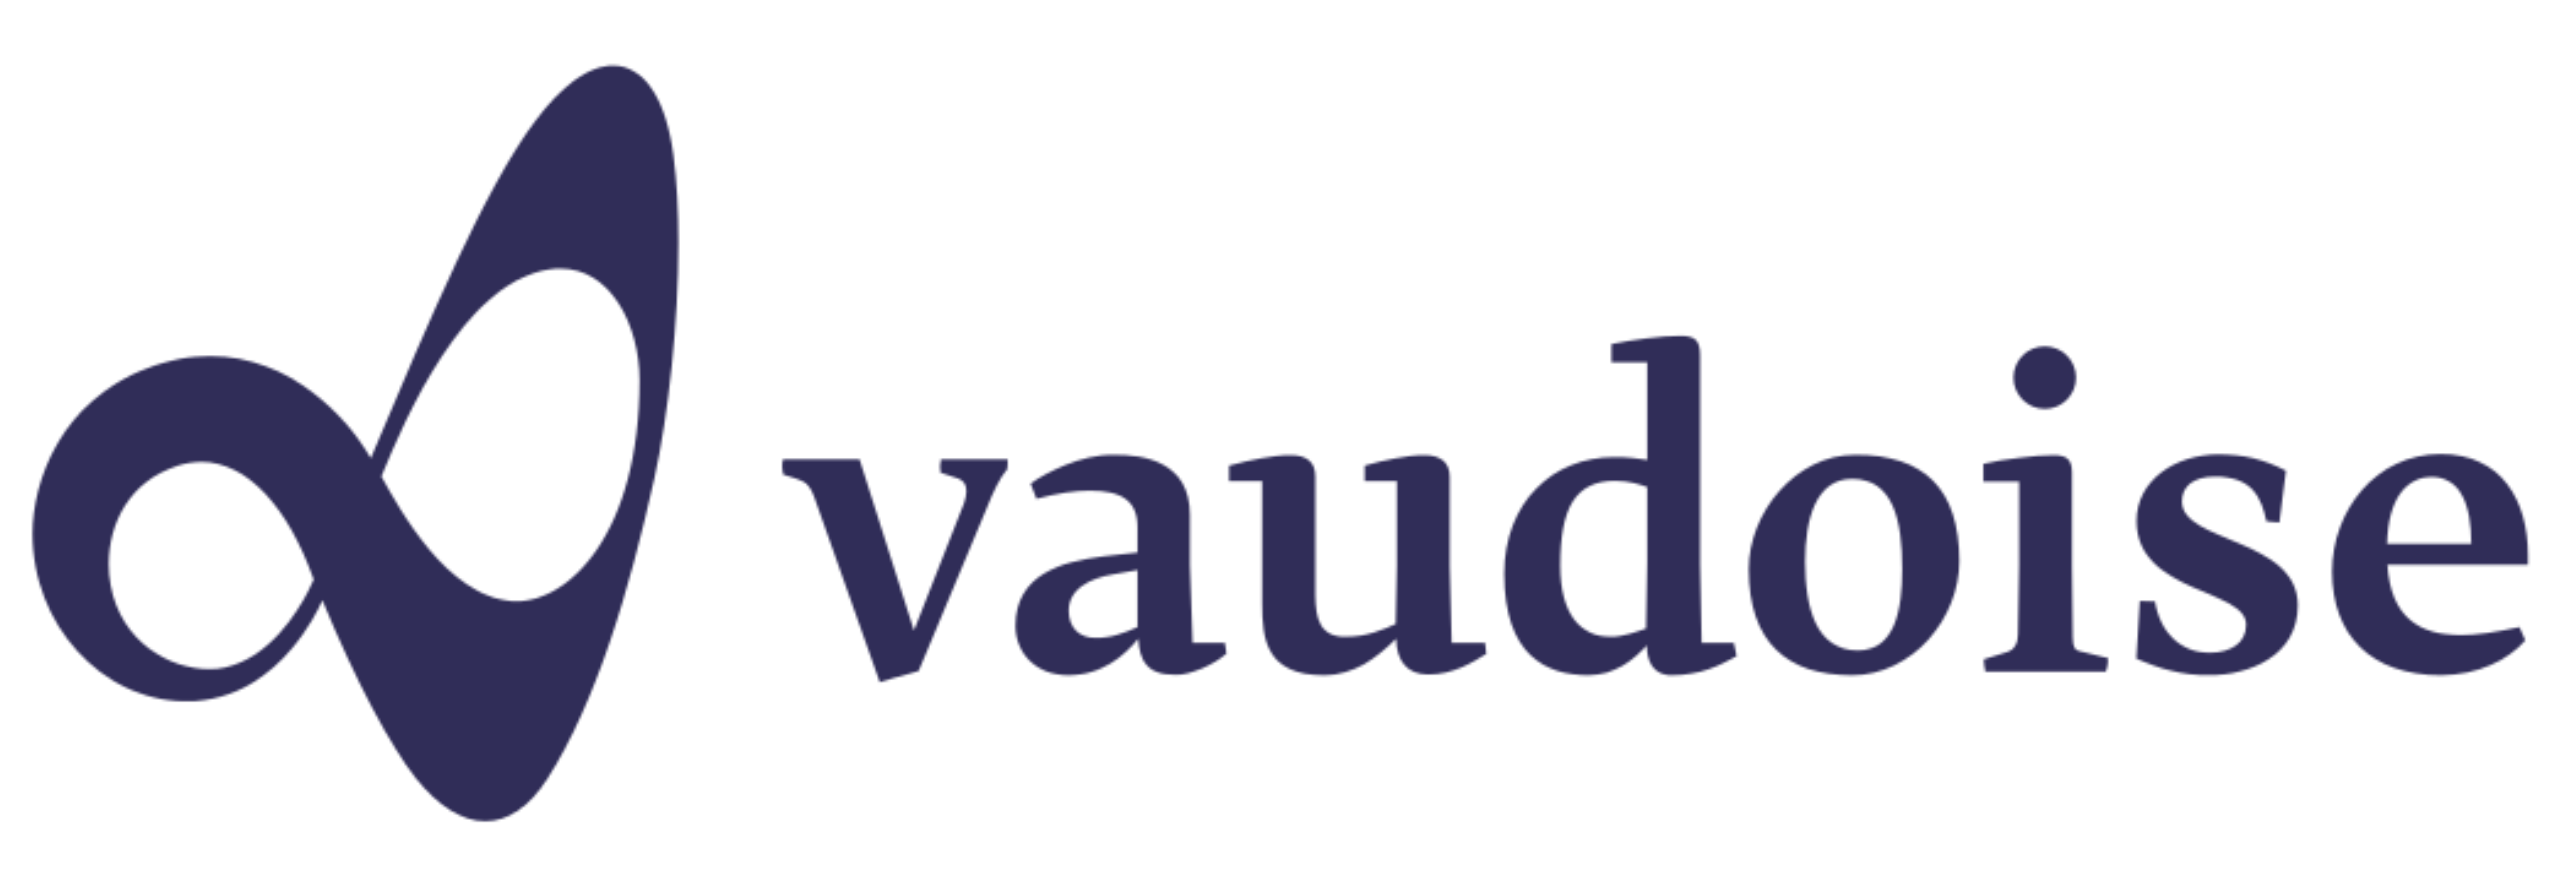 Vaudoise logo - Tryane Analytics for internal communications